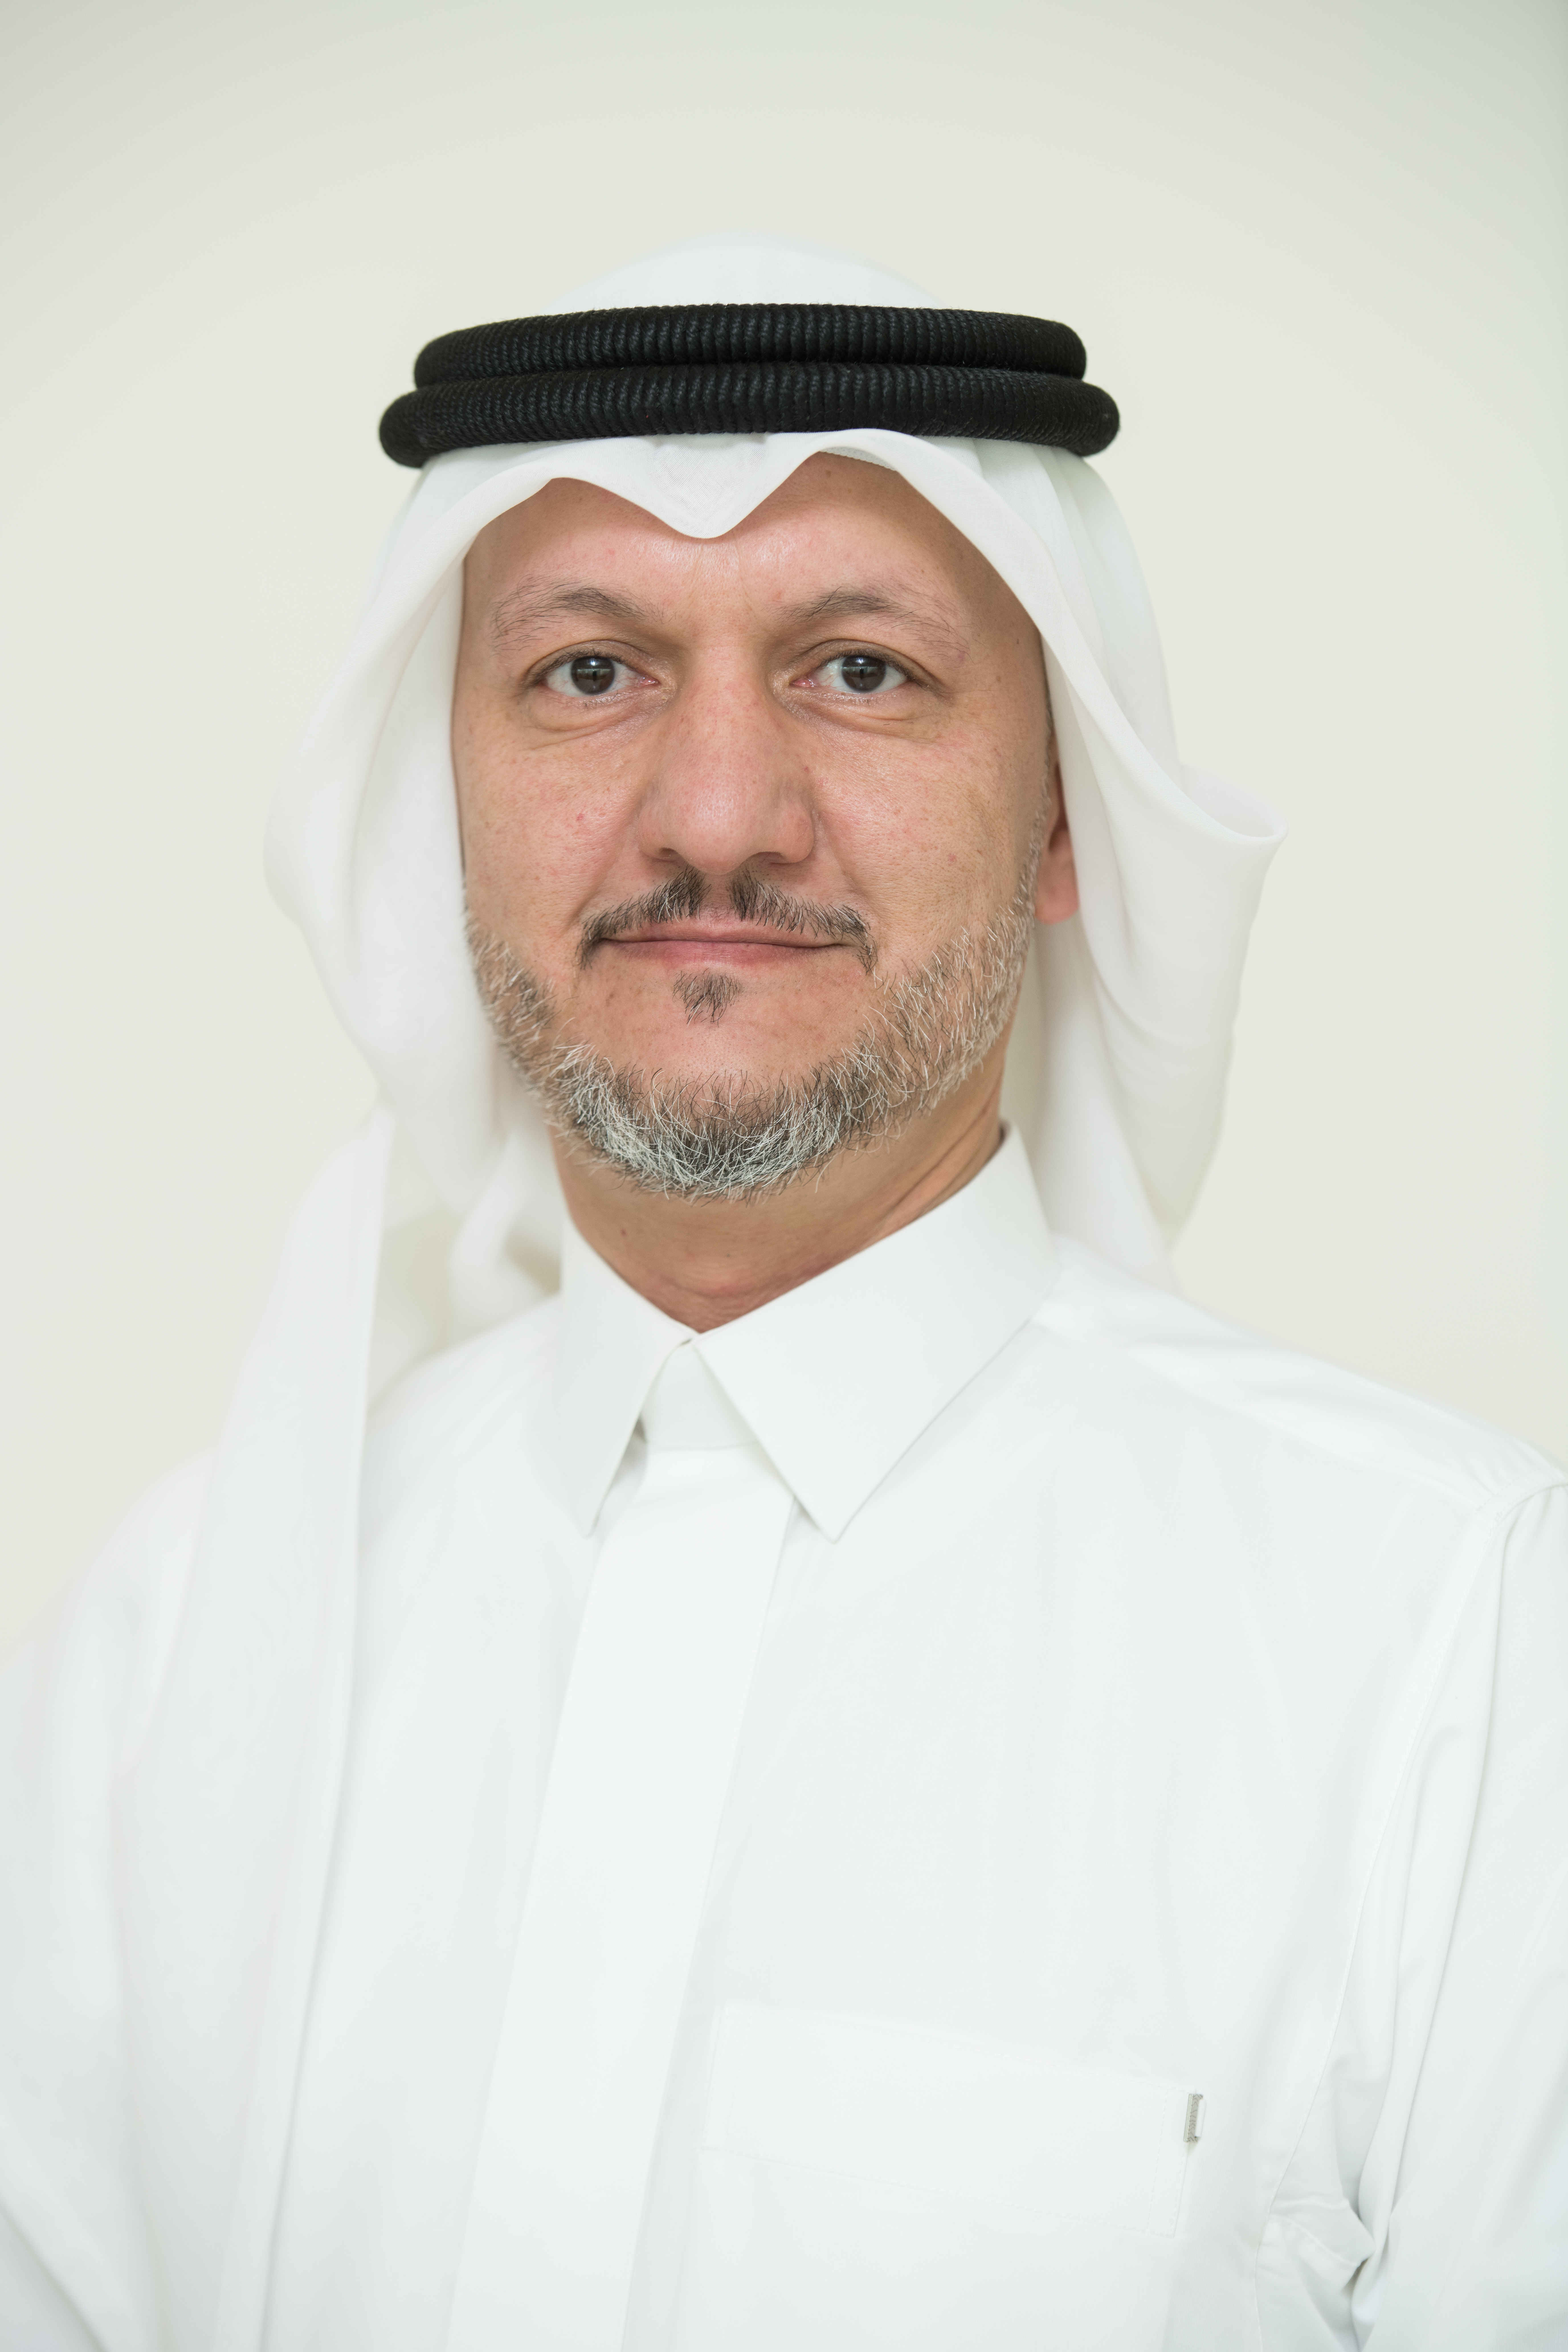 Wa’el Tashkandi, CEO of Novel, a JV between Baker Hughes and Saudi Aramco